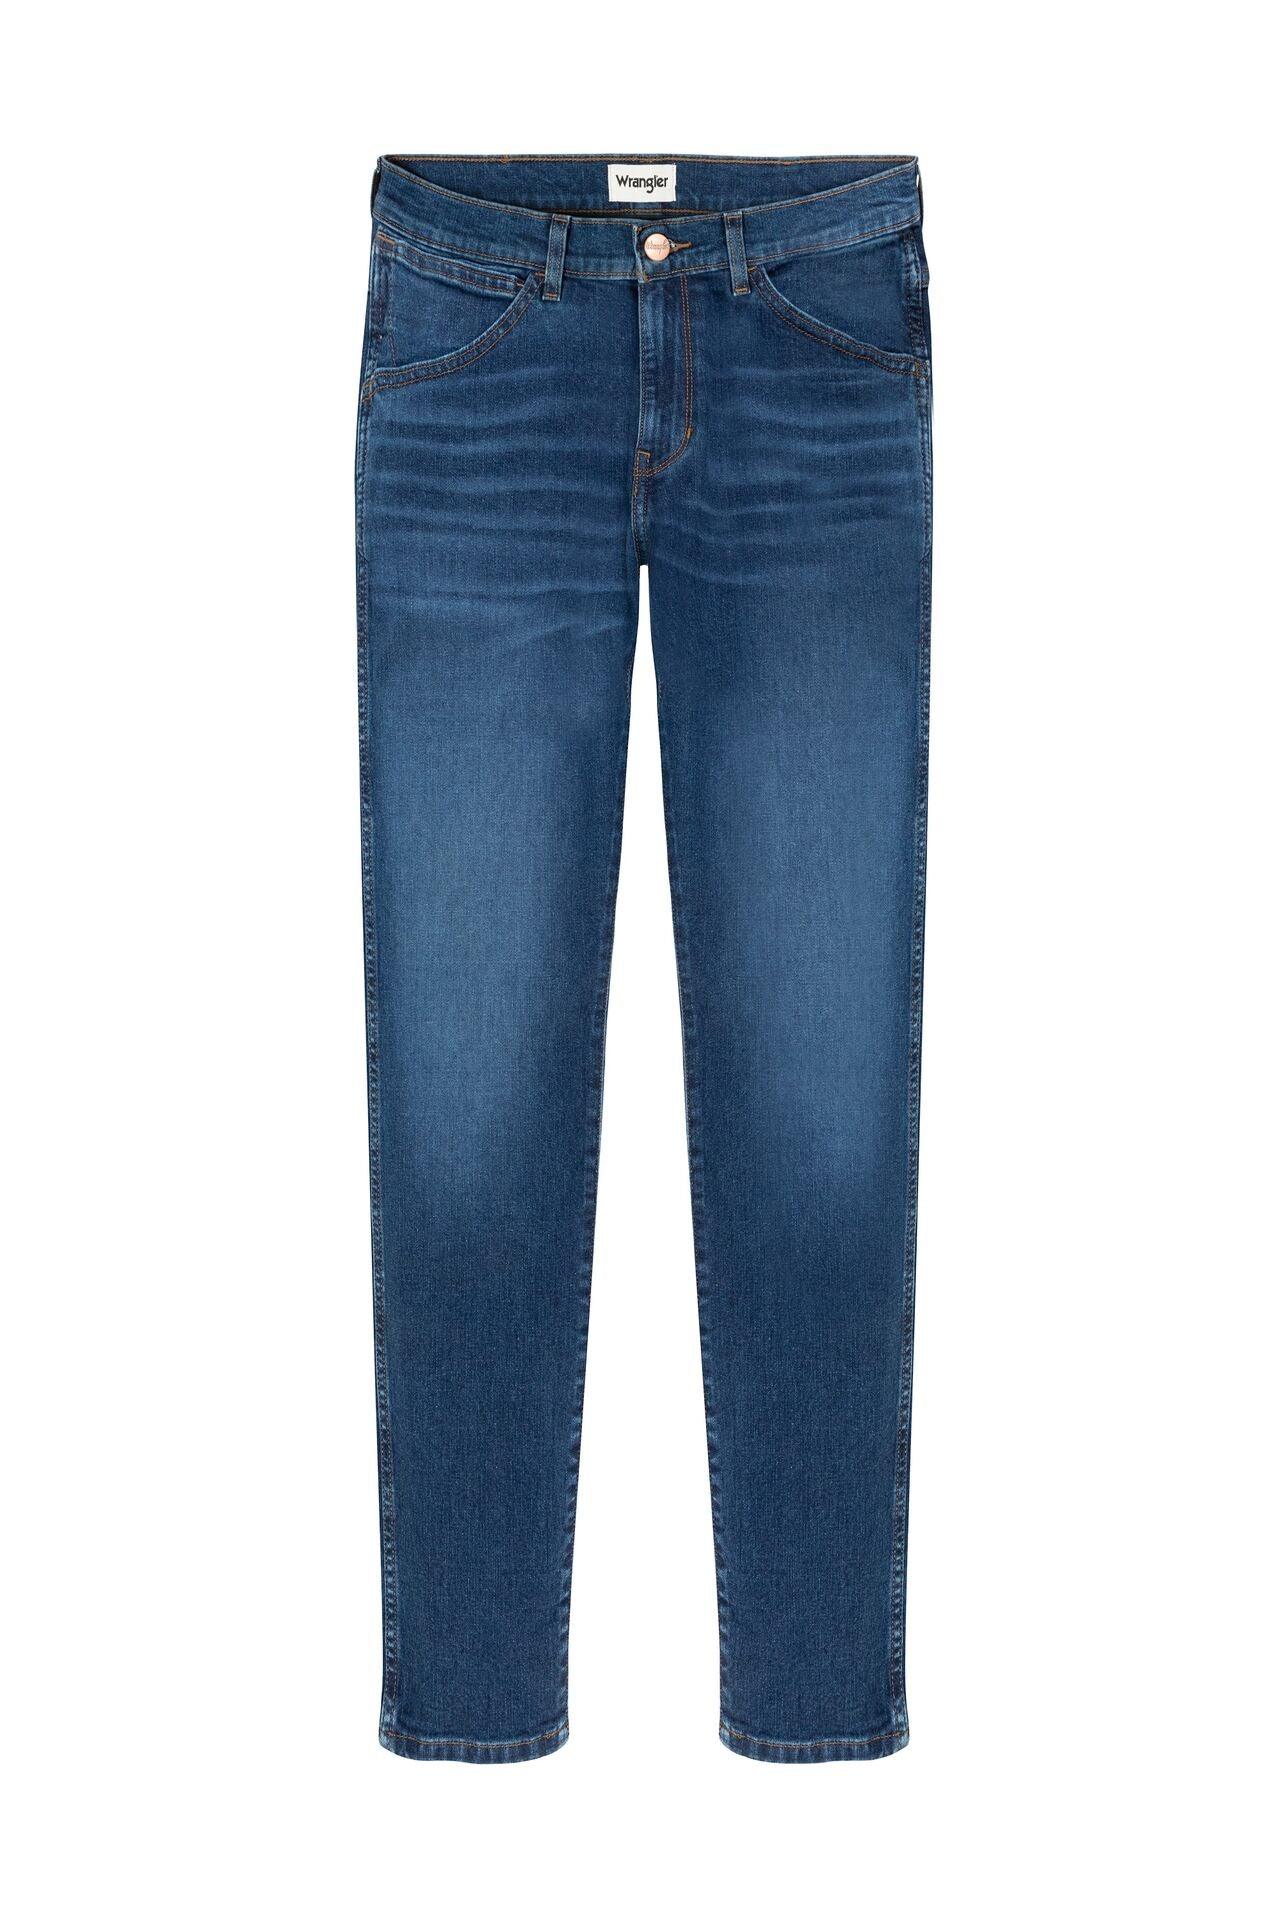 WRANGLER - ג'ינס BRYSON כחול כהה - MASHBIR//365